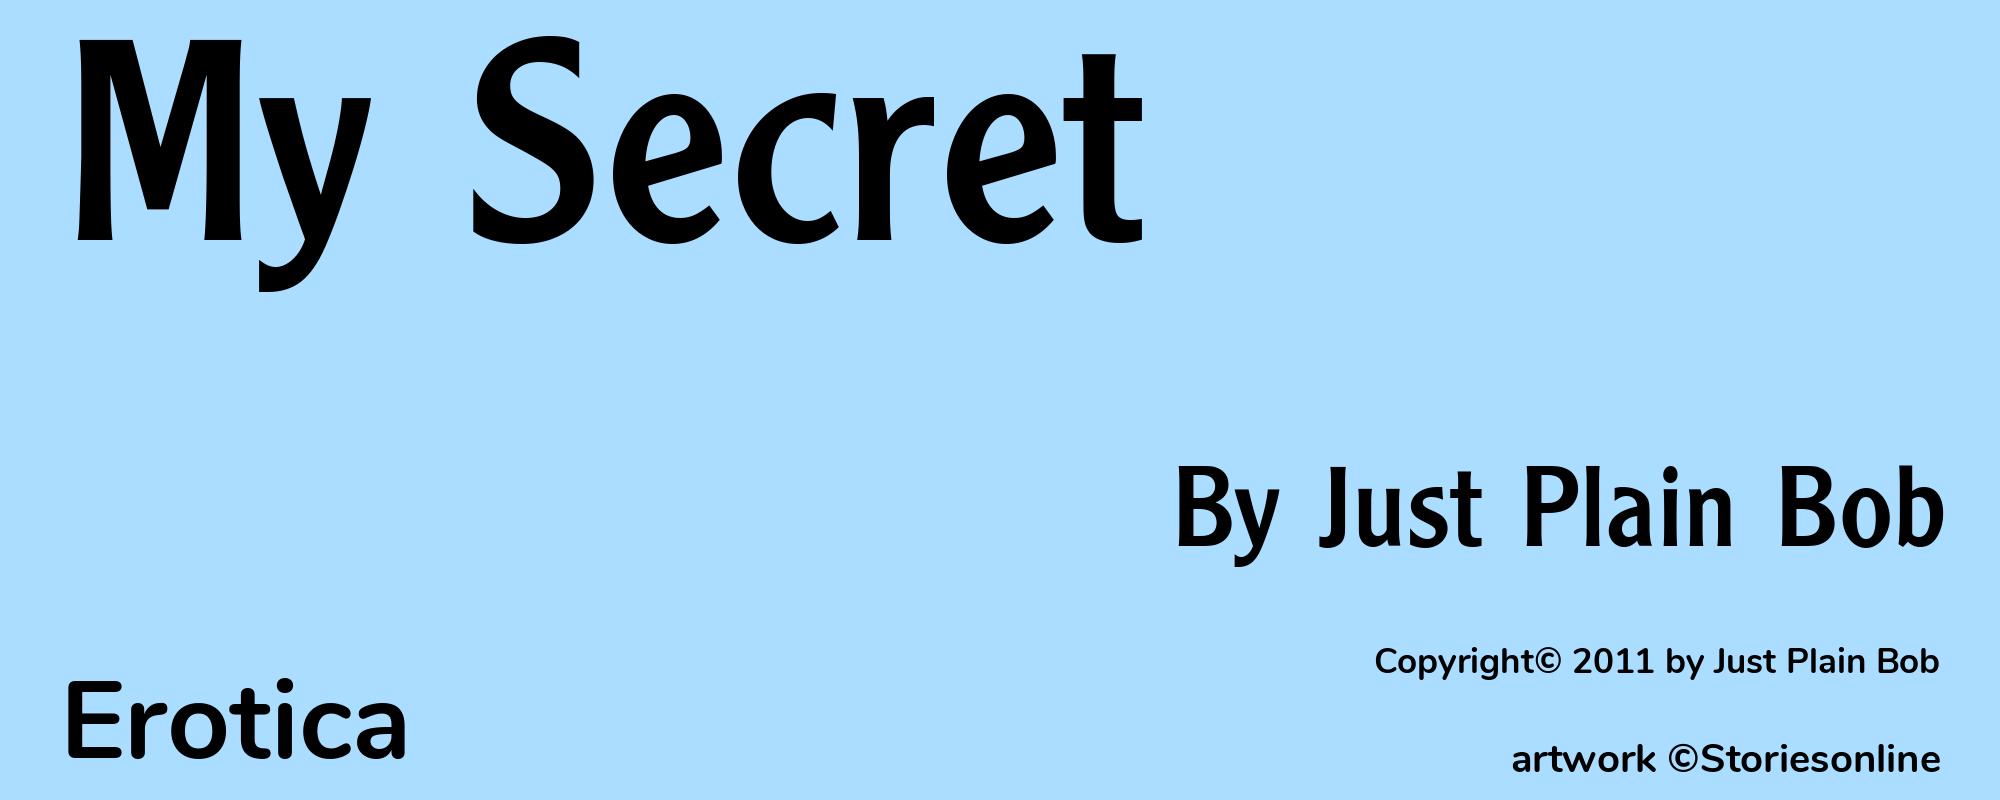 My Secret - Cover